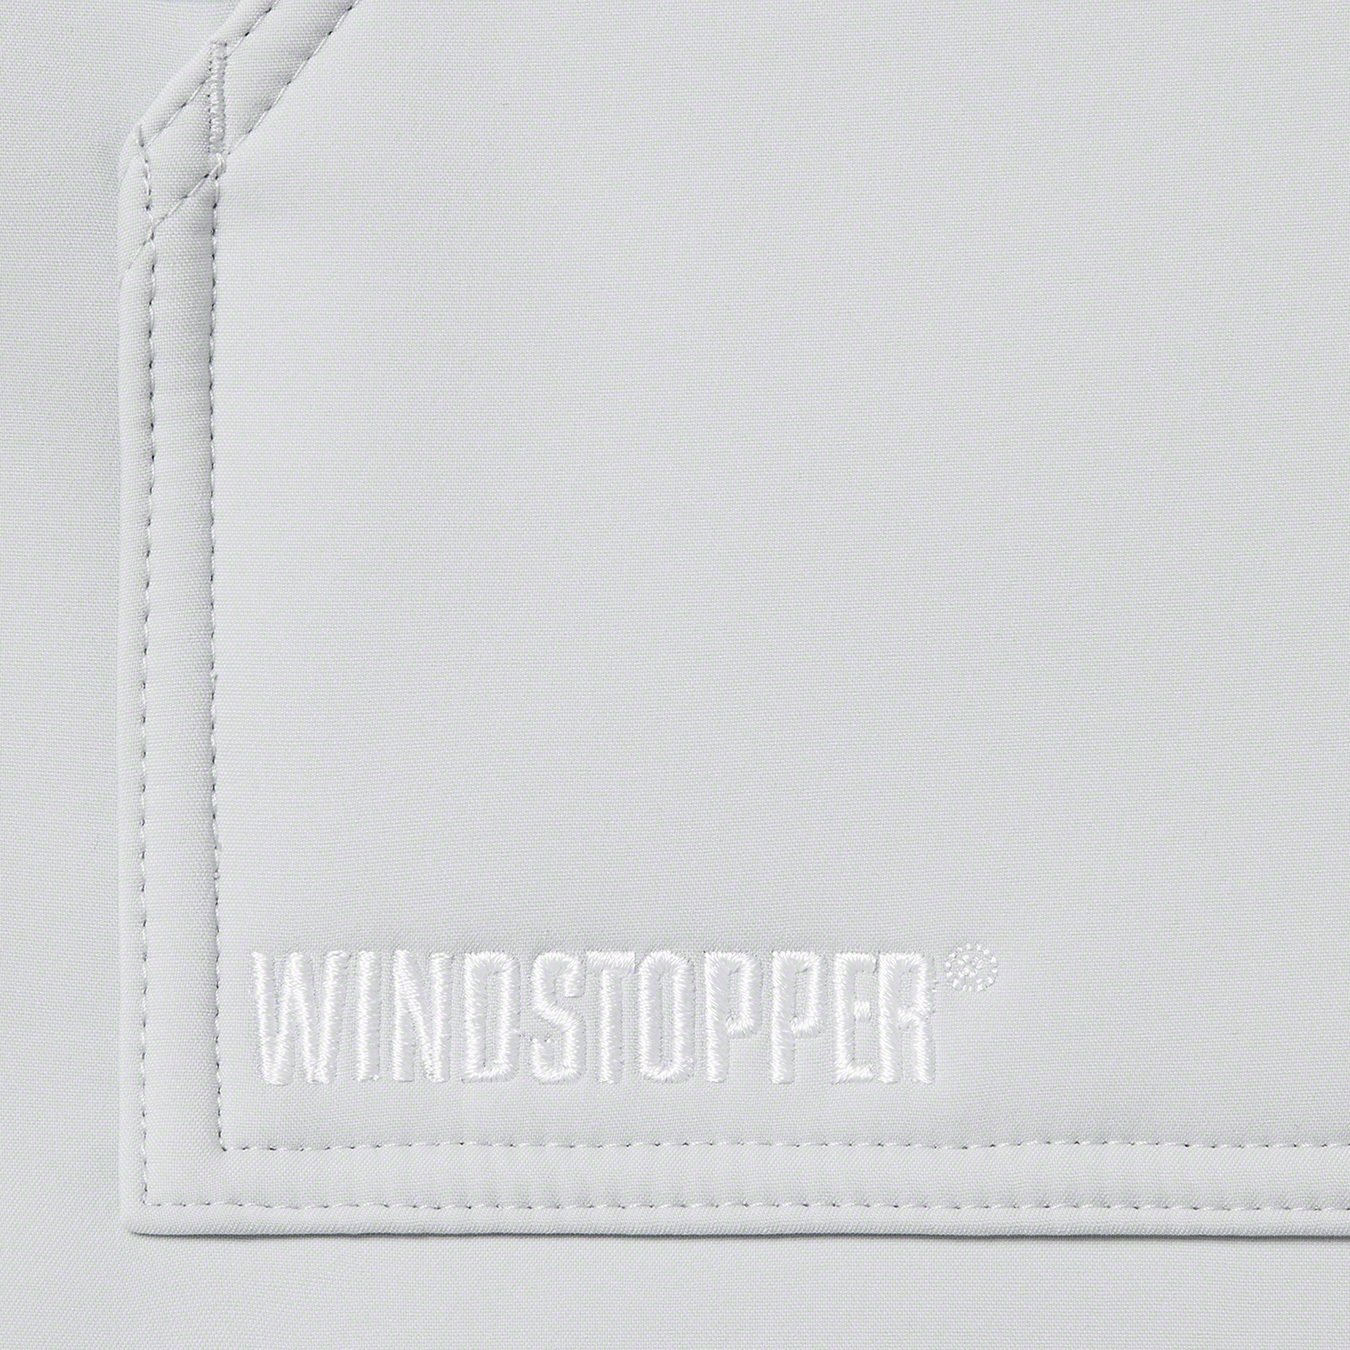 WINDSTOPPER Work Vest - fall winter 2022 - Supreme